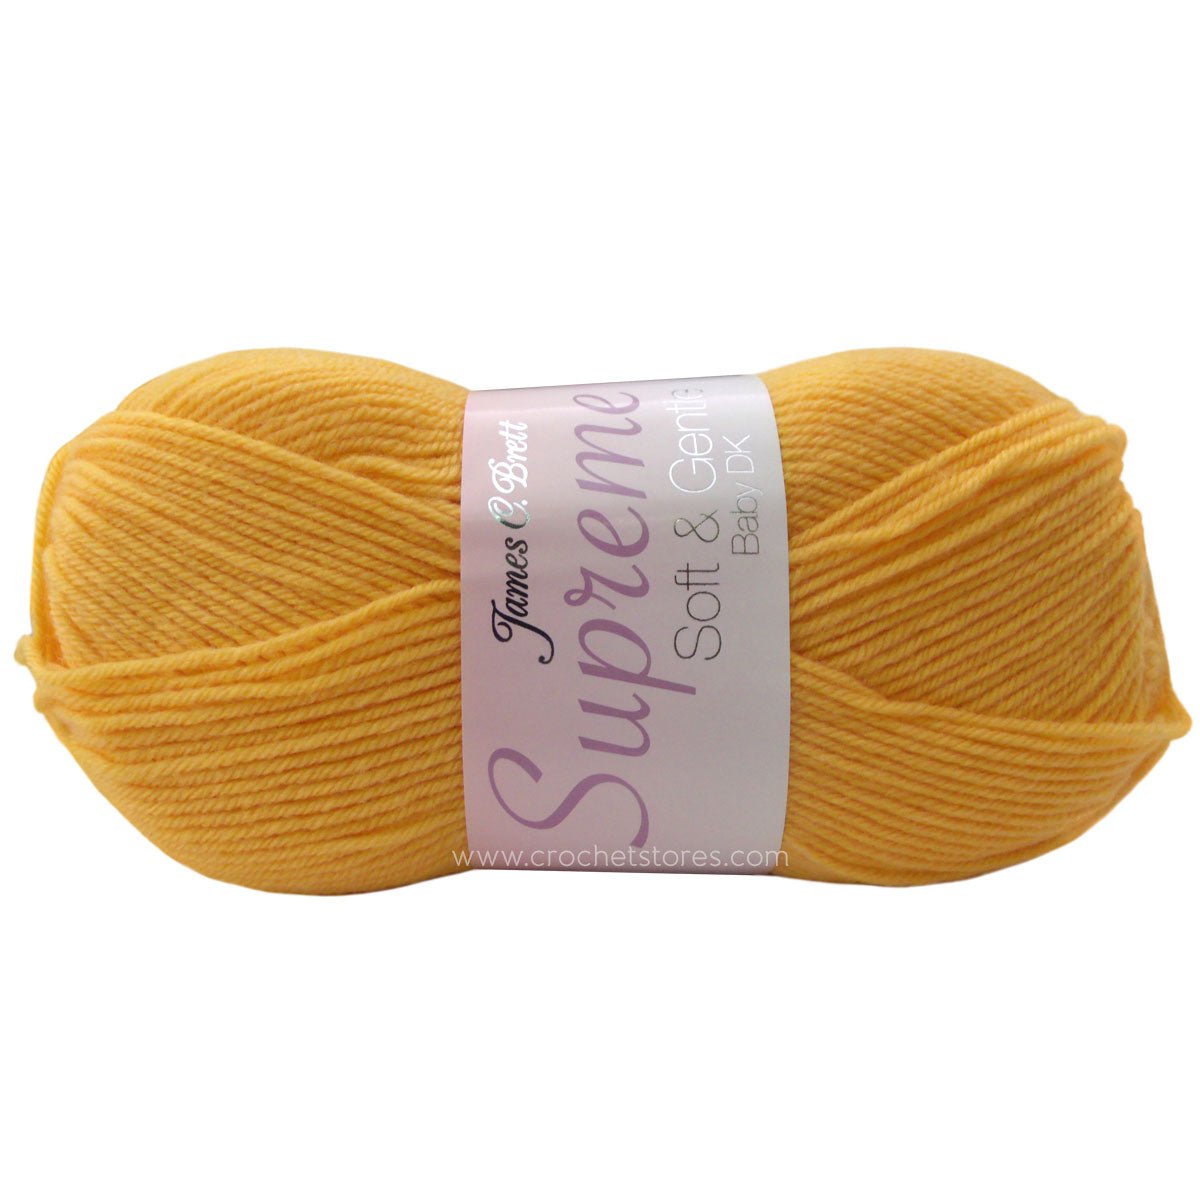 SUPREME BABY DK - CrochetstoresSNG155060019099629